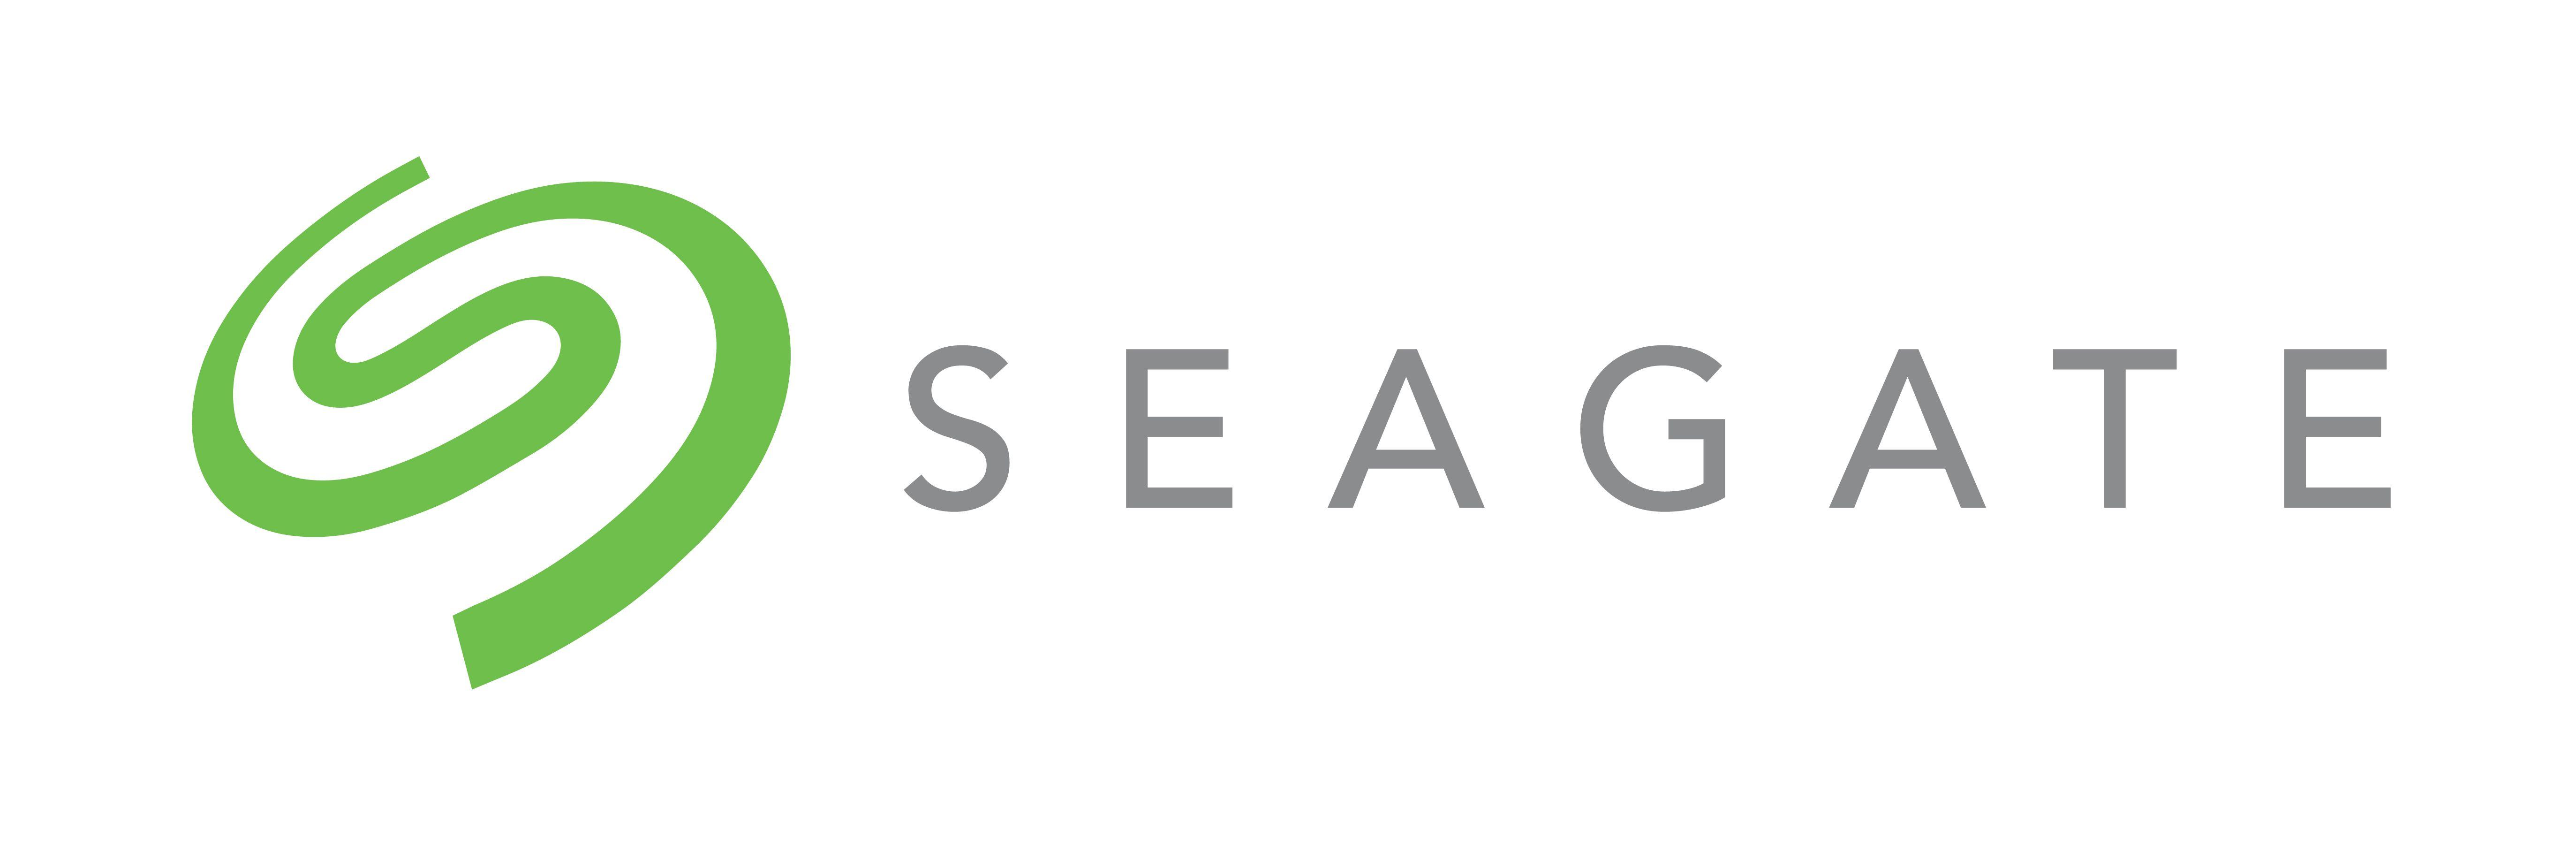 Seagate Logo - Living Logo | Seagate US